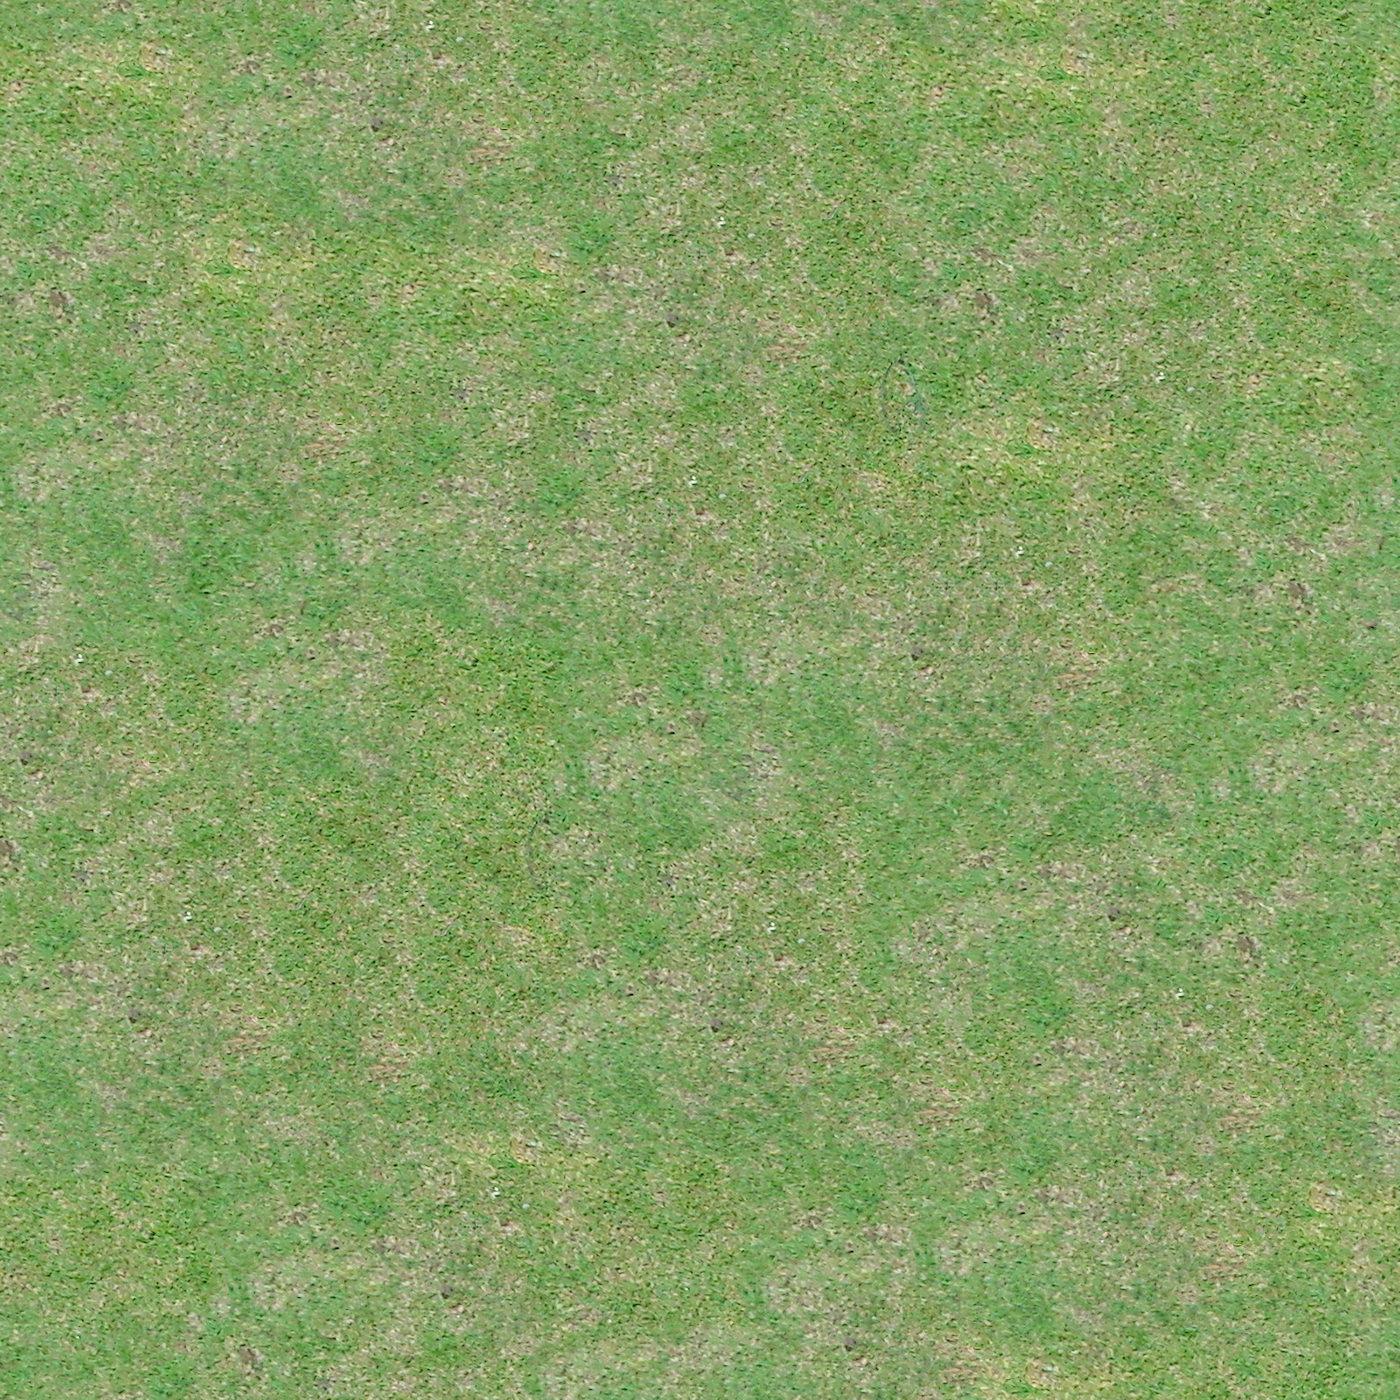 Grass Texture Seamless Seamless Texture Grass Textures Lawn Field Wild